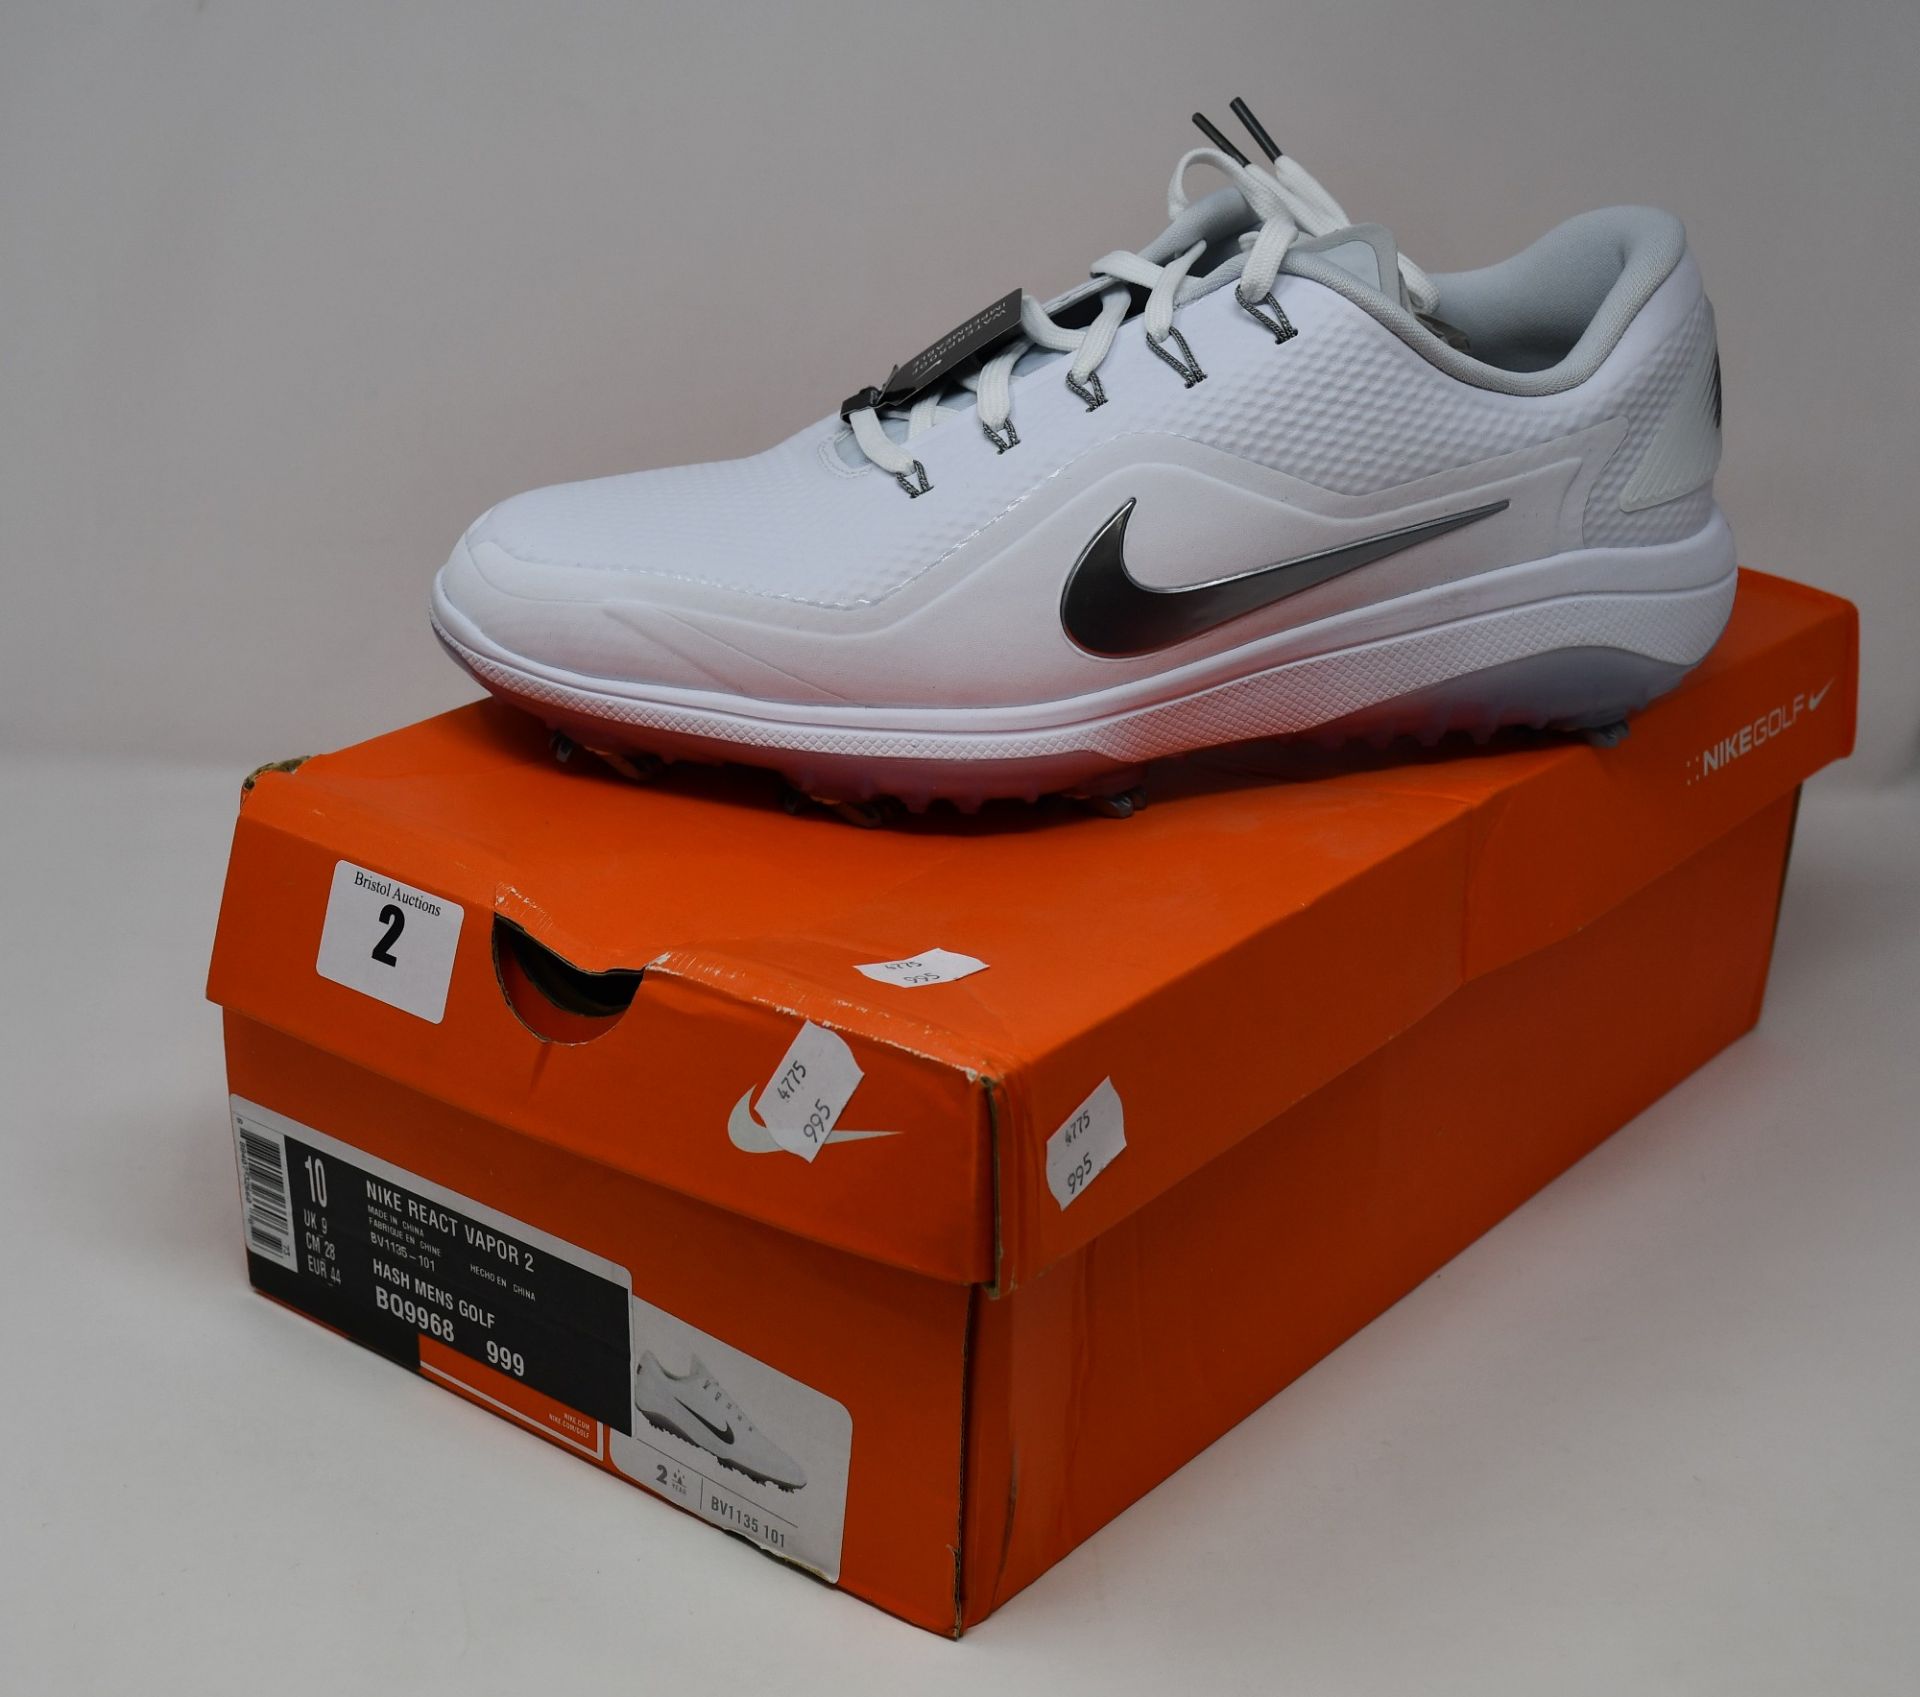 A pair of as new Nike React Vapor 2 golf shoes (UK 9).